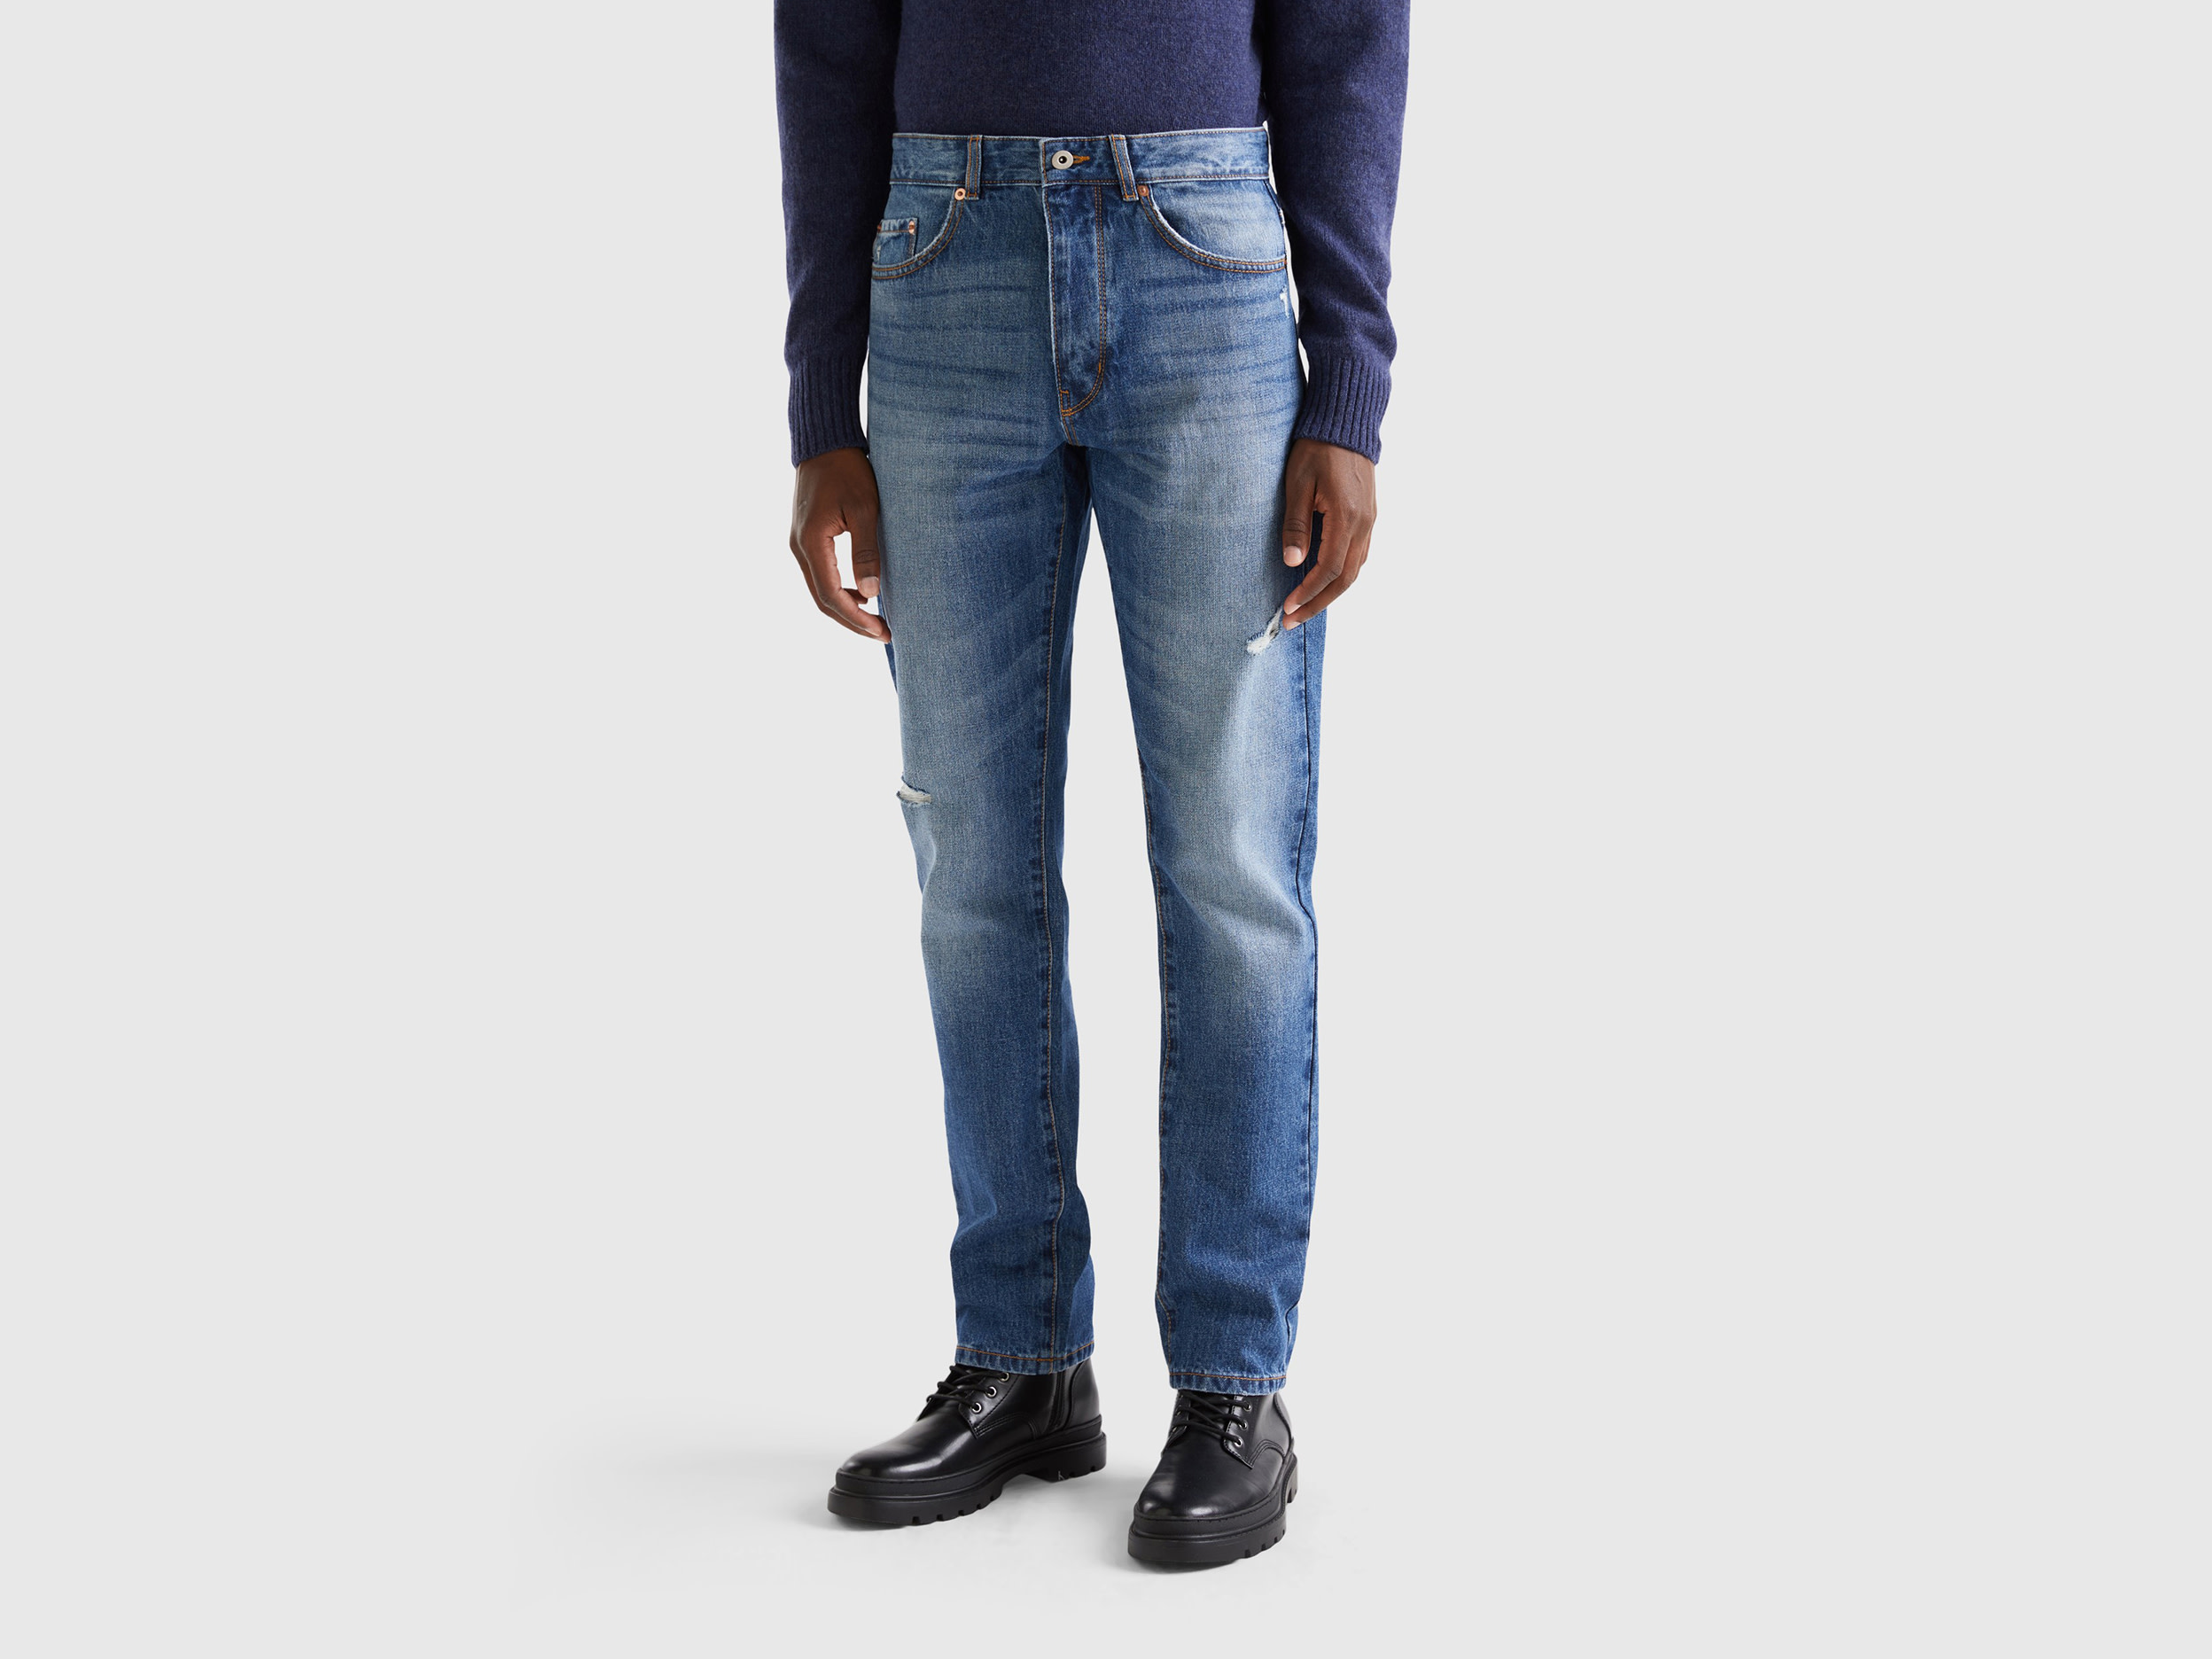 Benetton, Straight Leg Jeans With Tears, size 34, Light Blue, Men